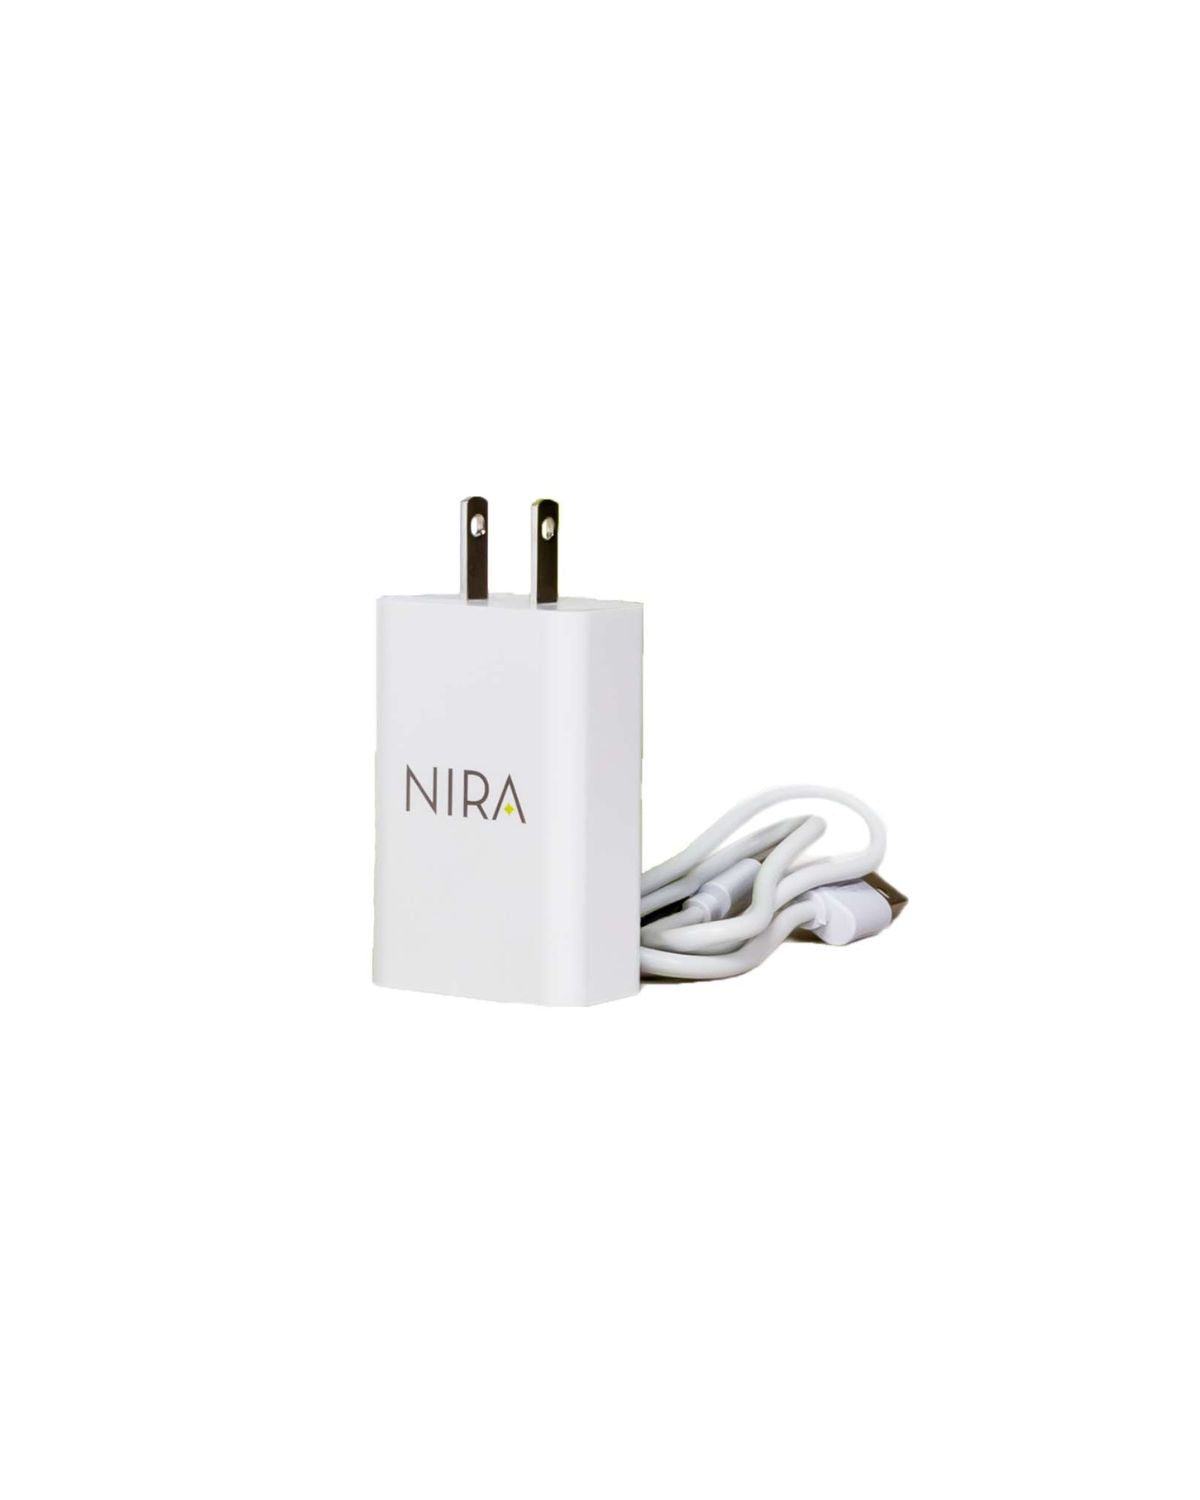 NIRA Power Adapter & Charging Cable